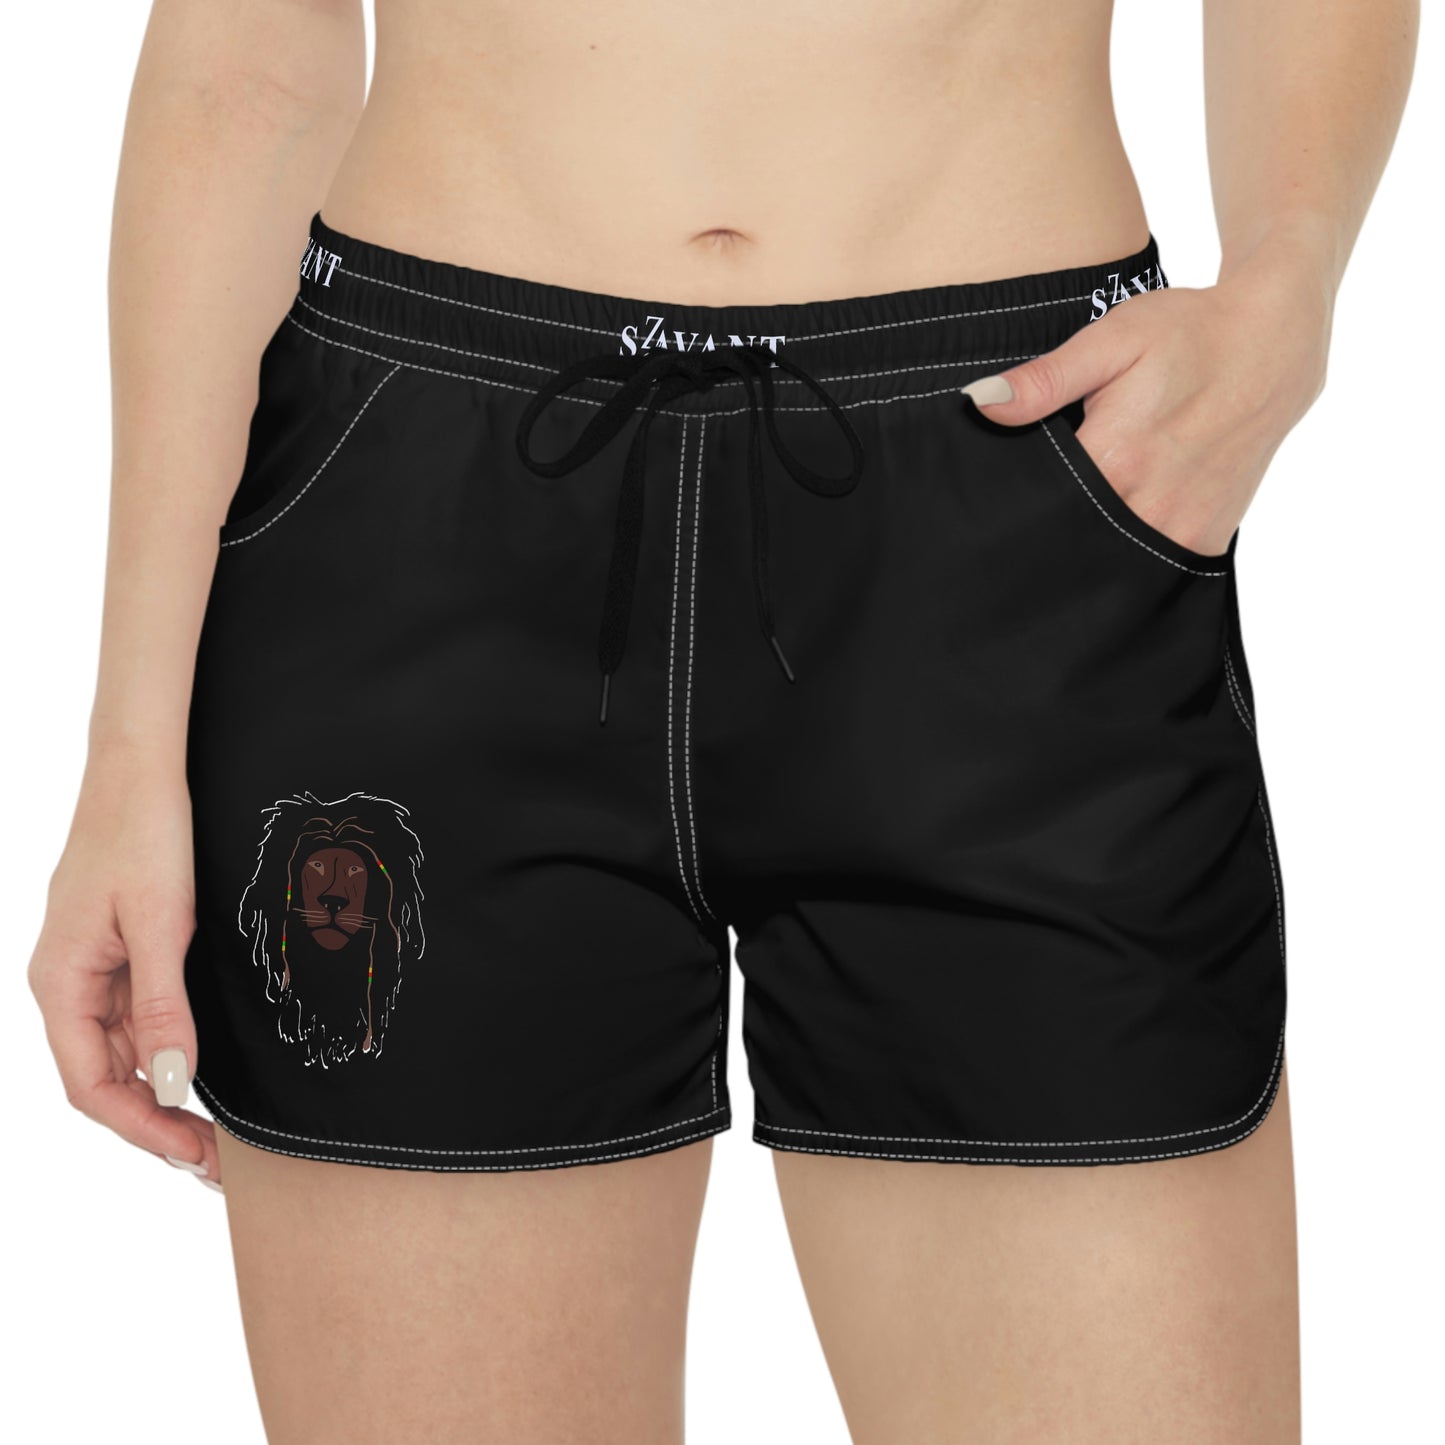 Women's casual drawstring shorts - Black